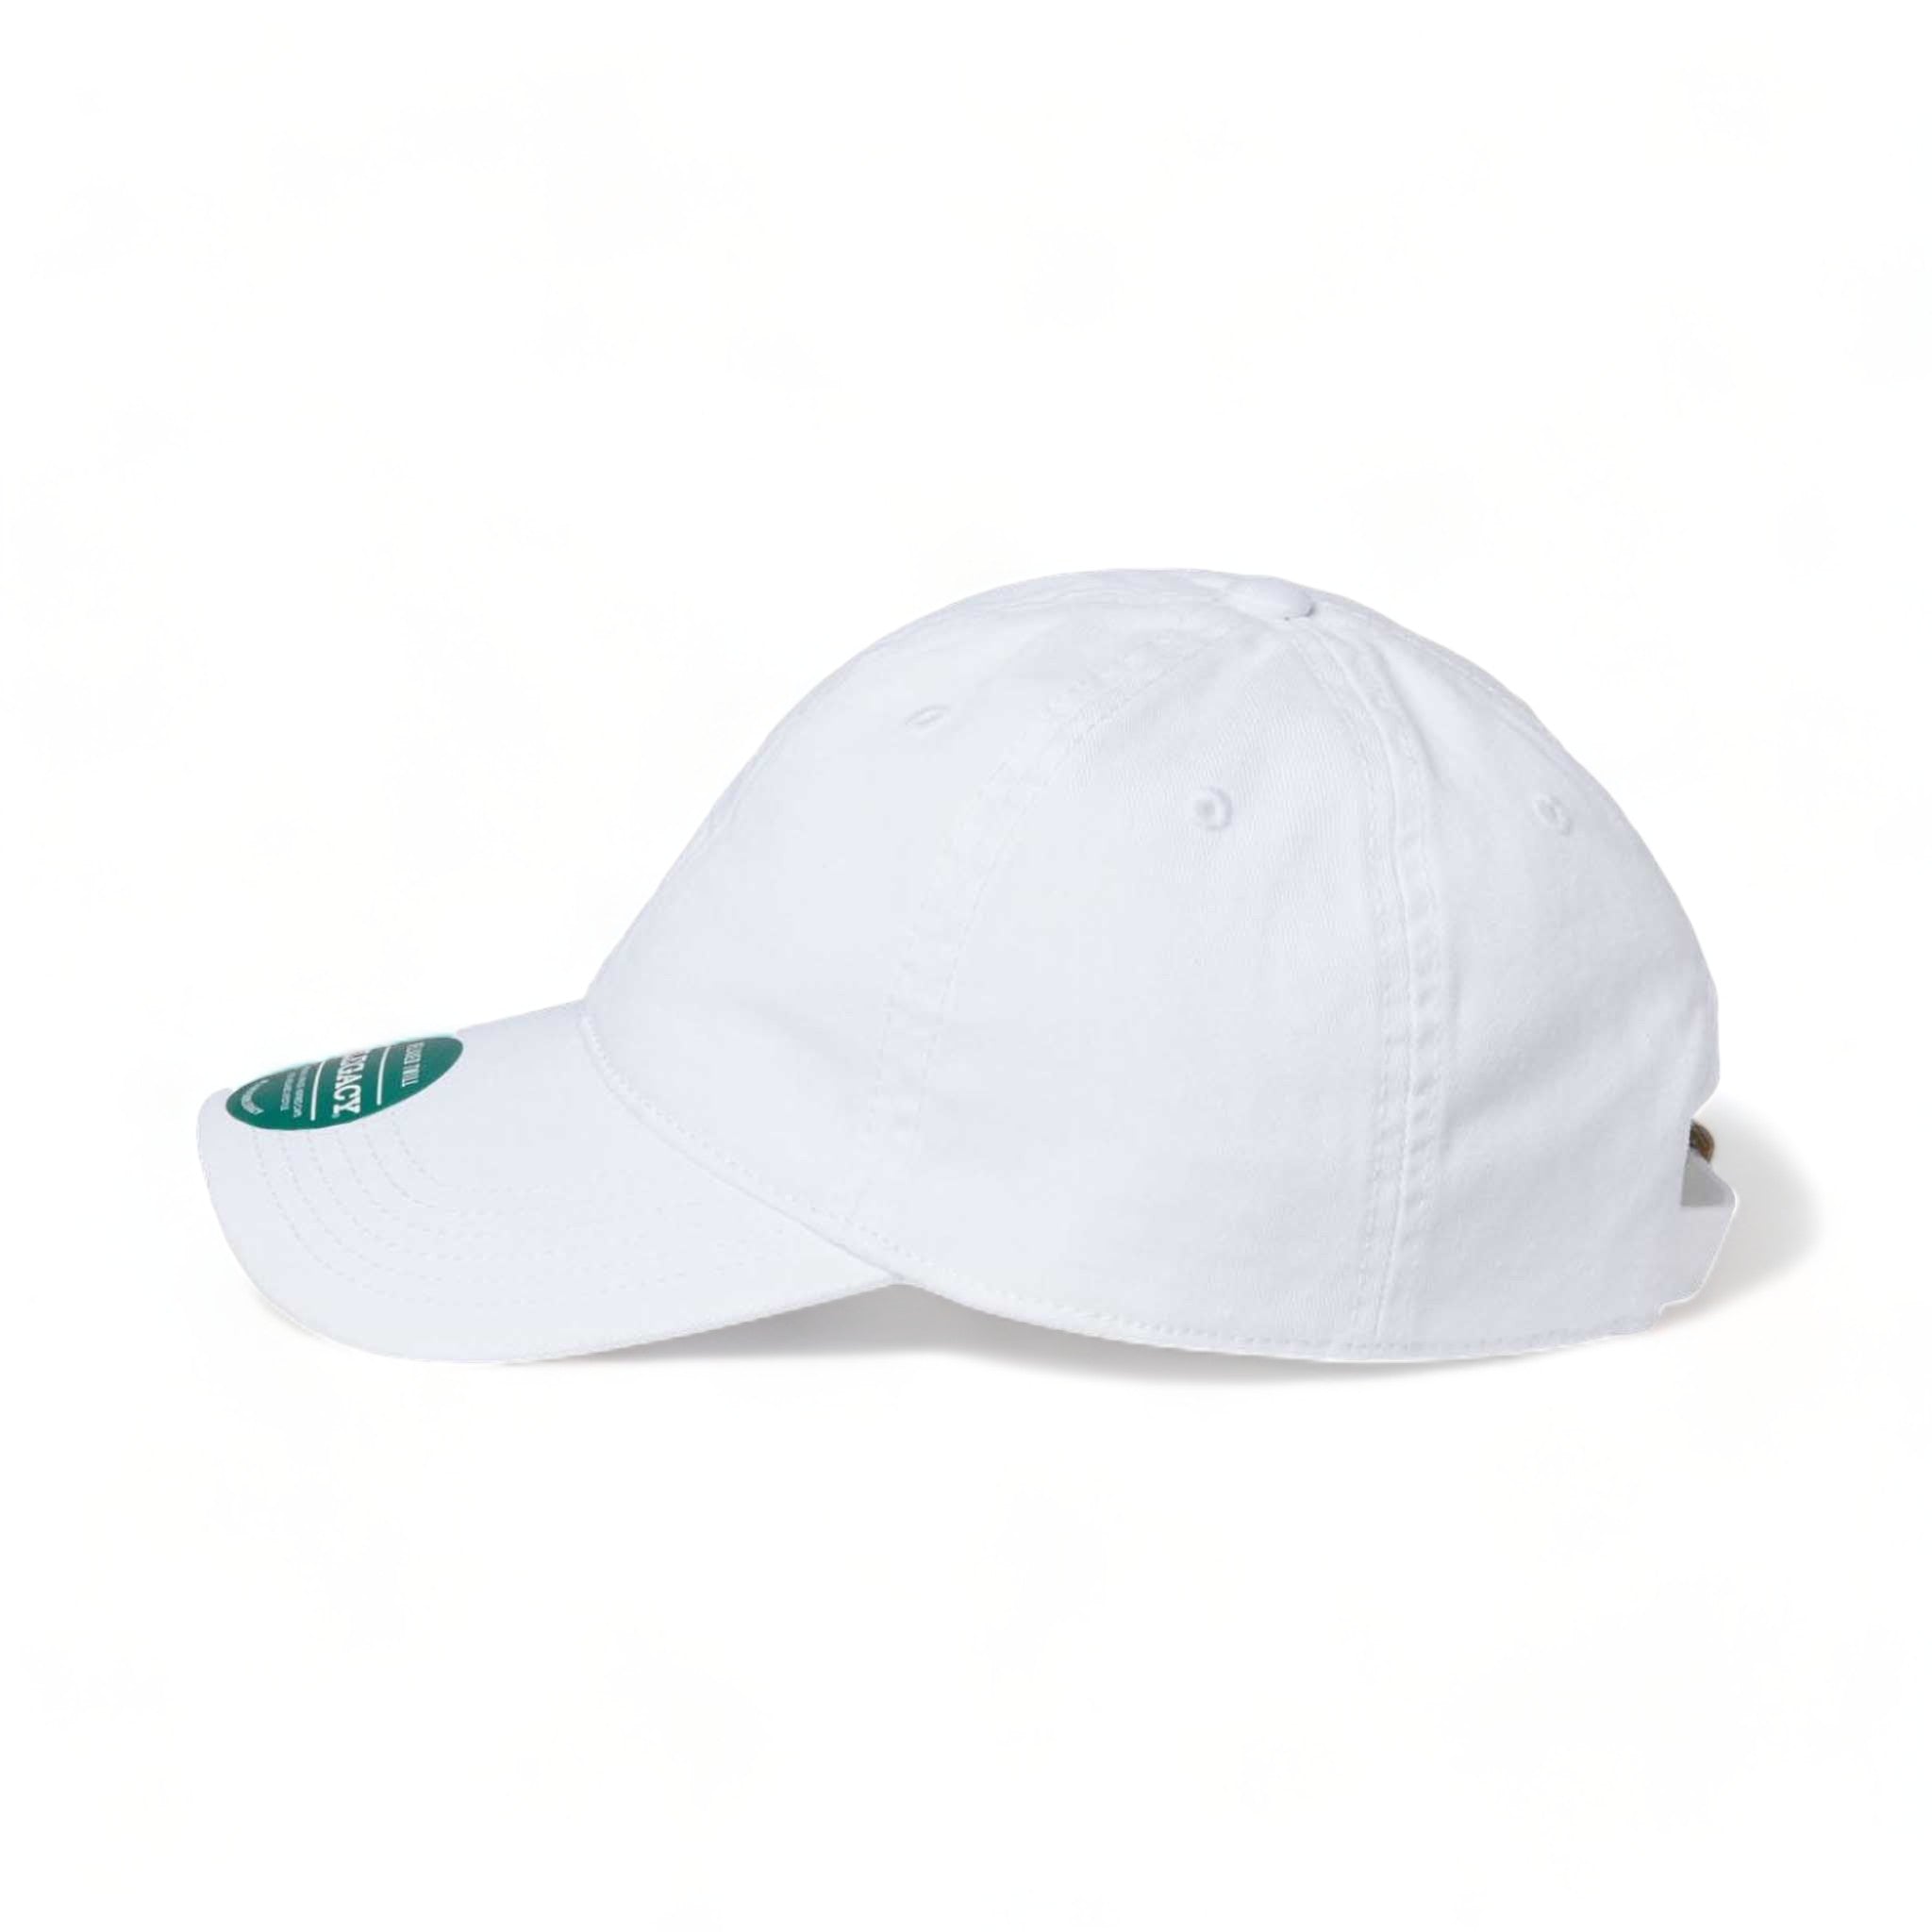 Side view of LEGACY EZA custom hat in white